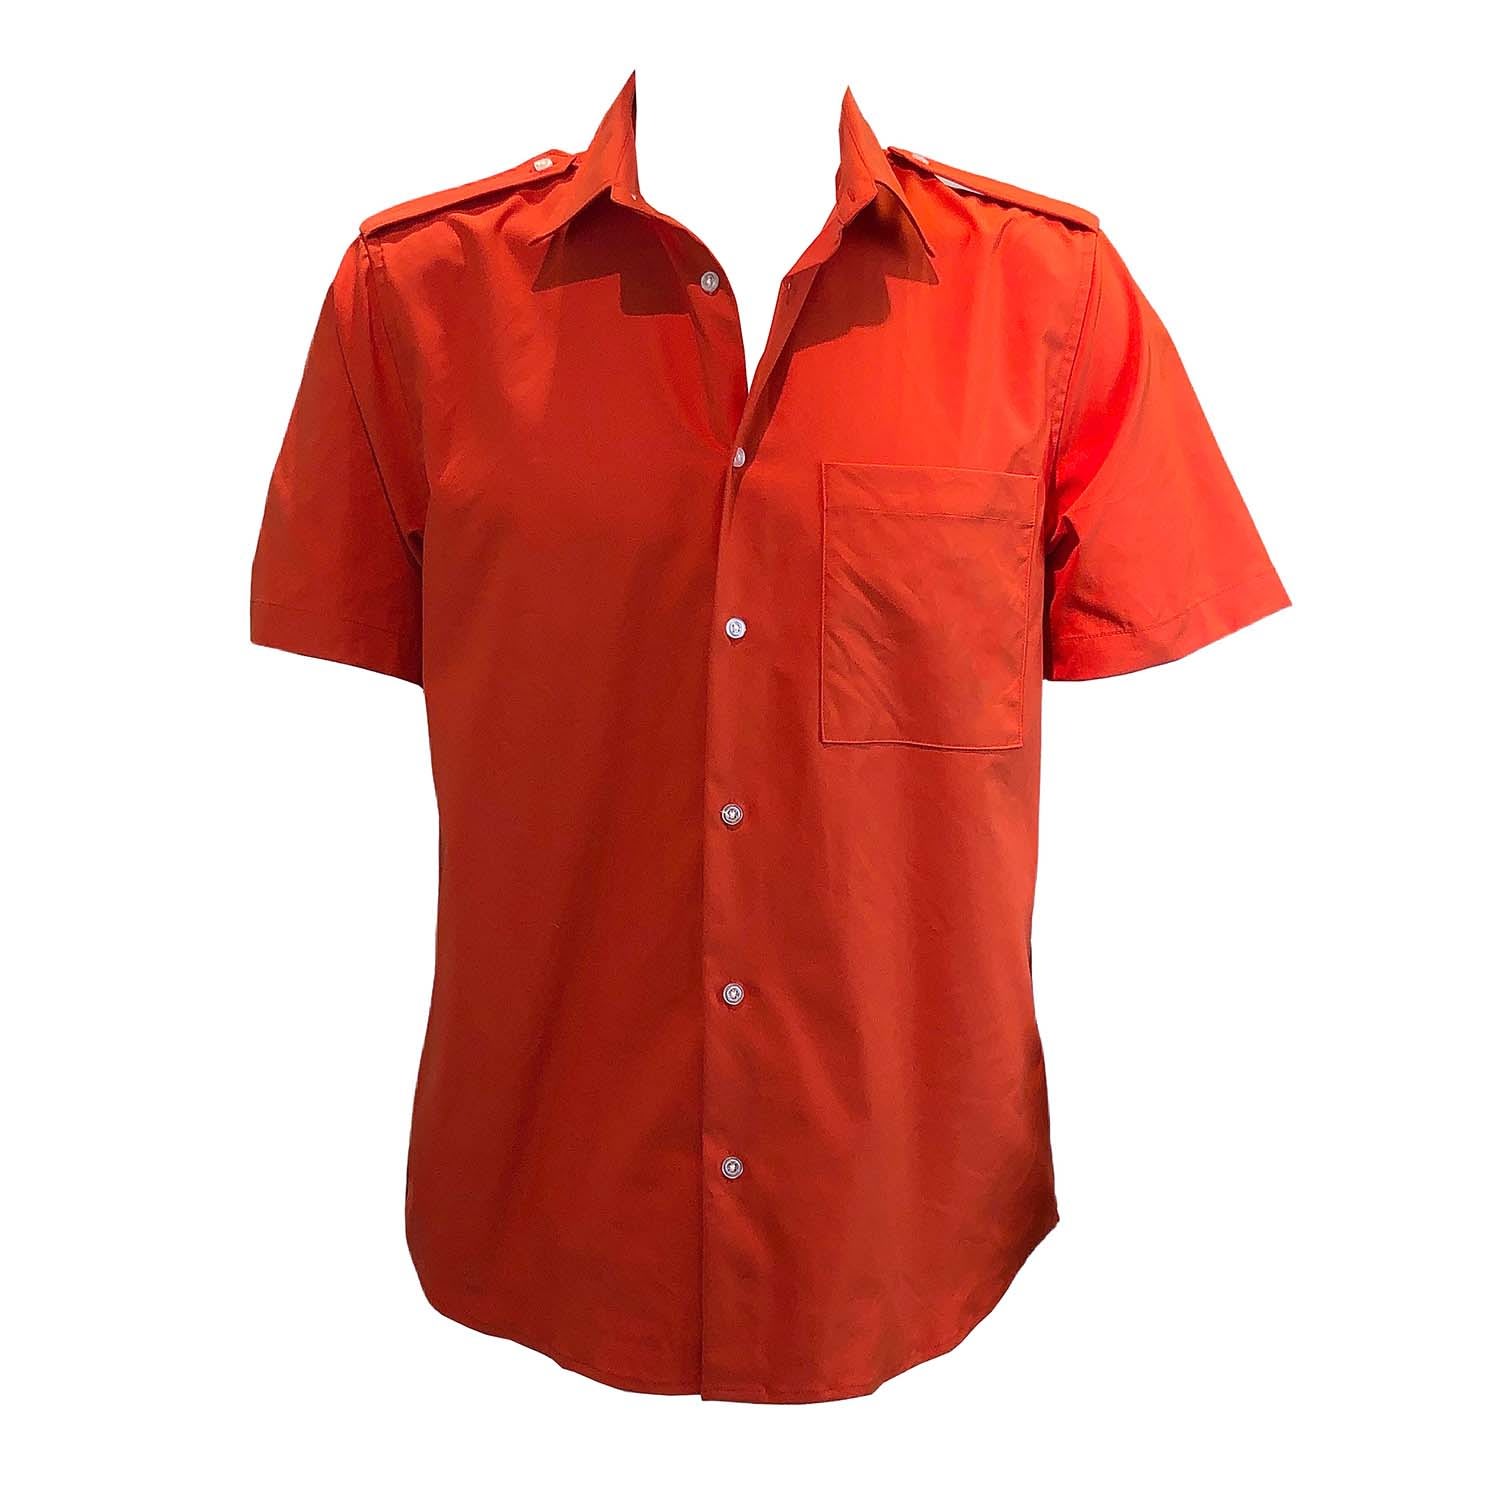 Men's Yellow / Orange Thorn Short Sleeved Shirt Medium SNIDER